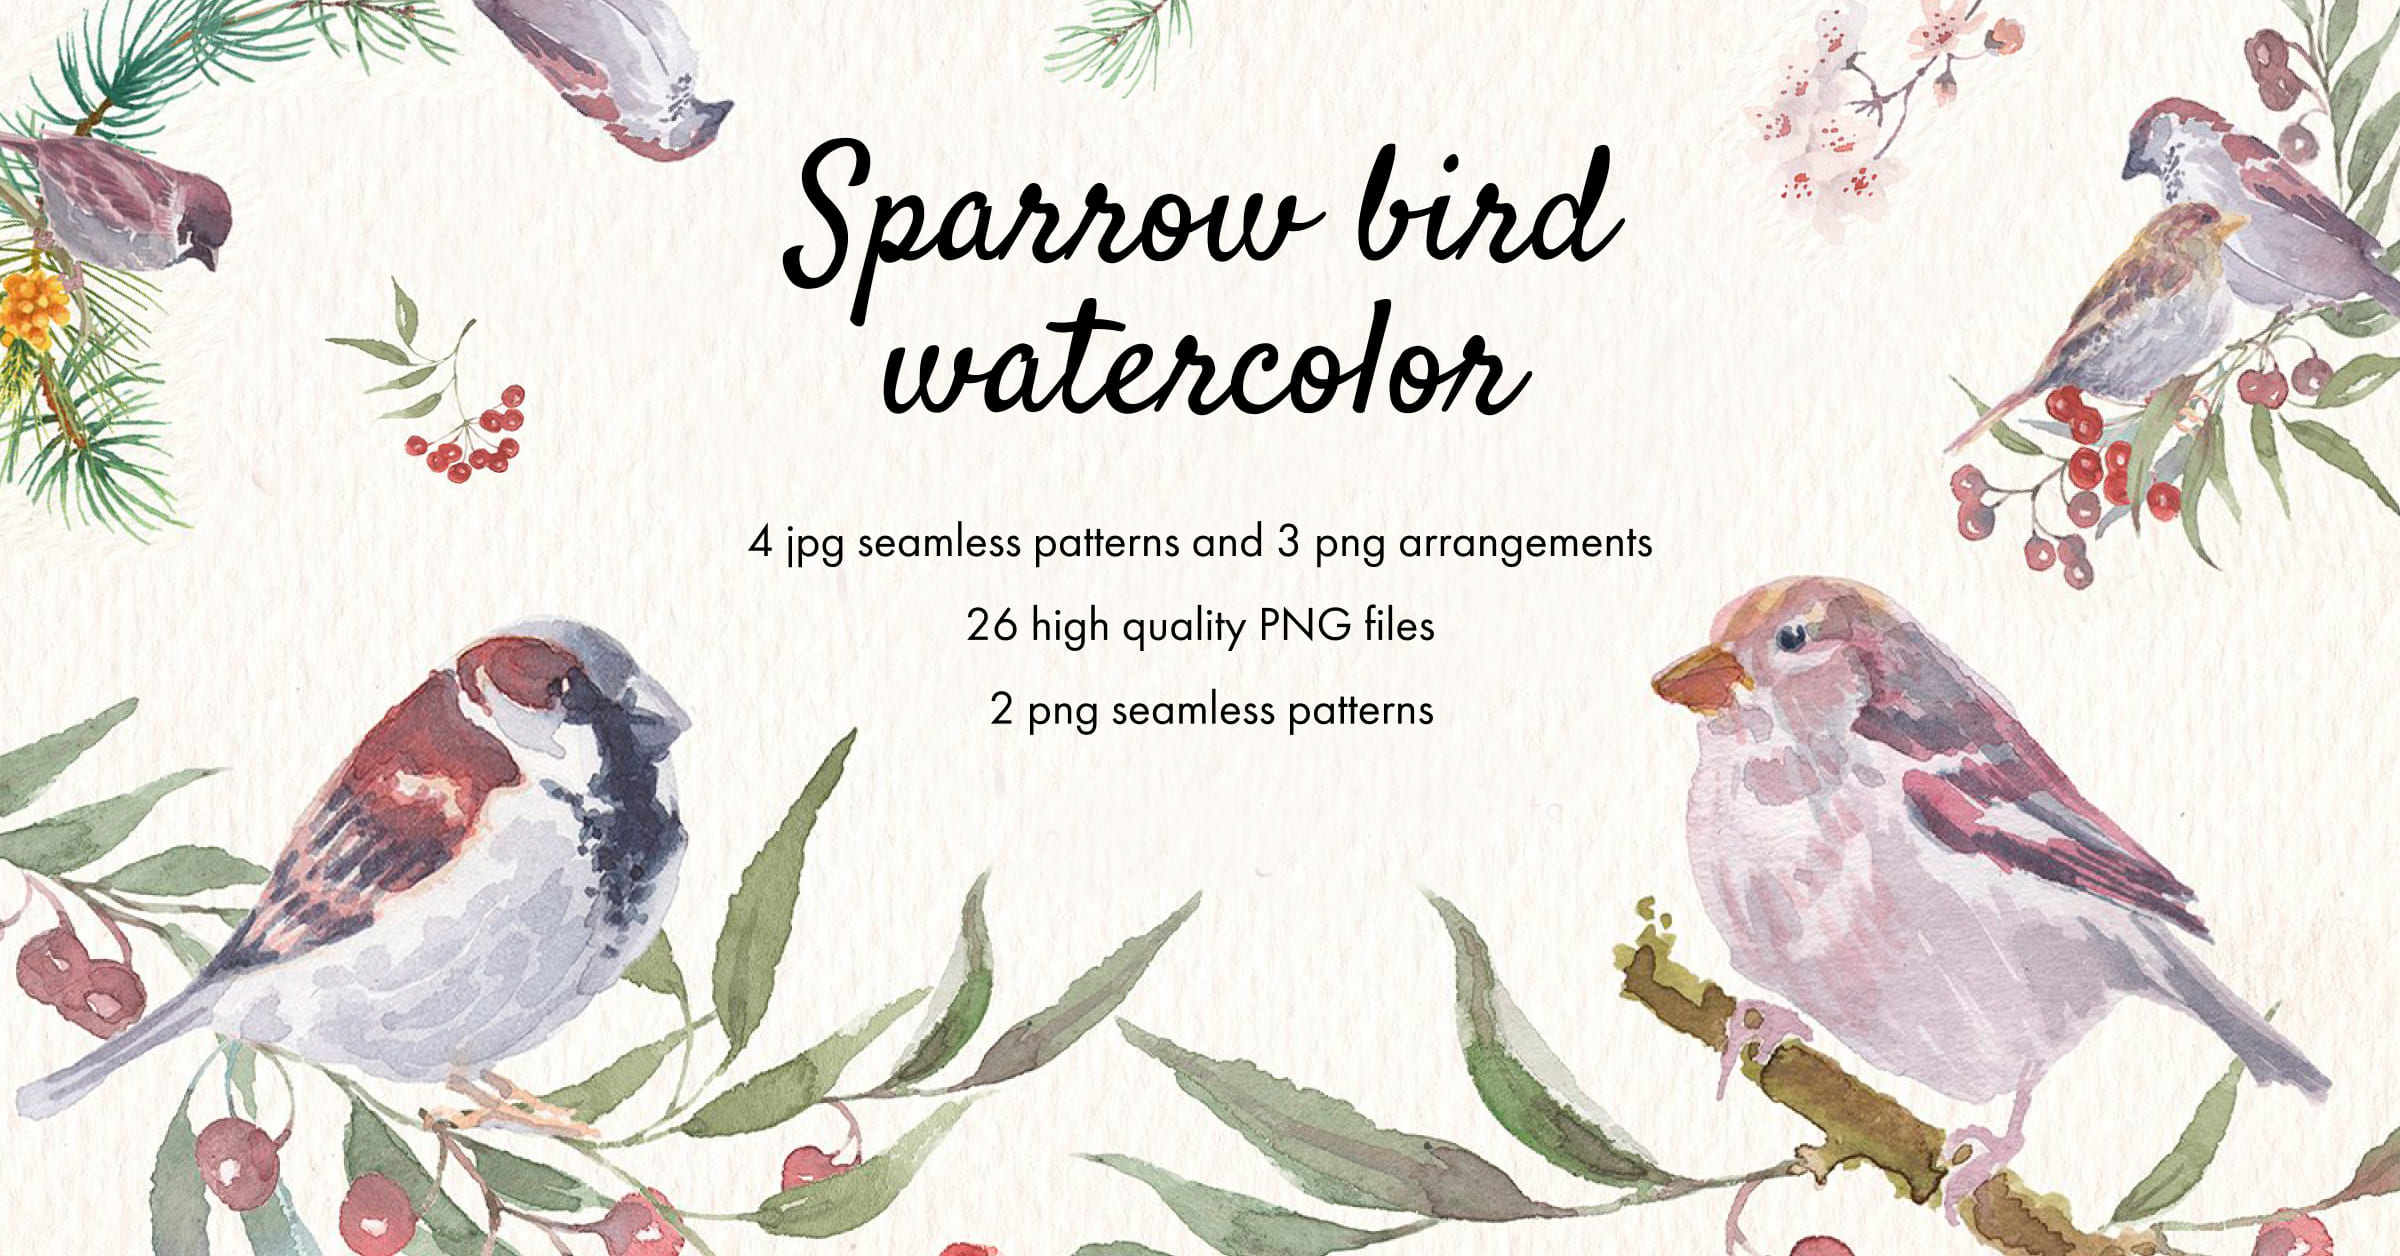 Sparrow bird watercolor clipart - Facebook page preview.